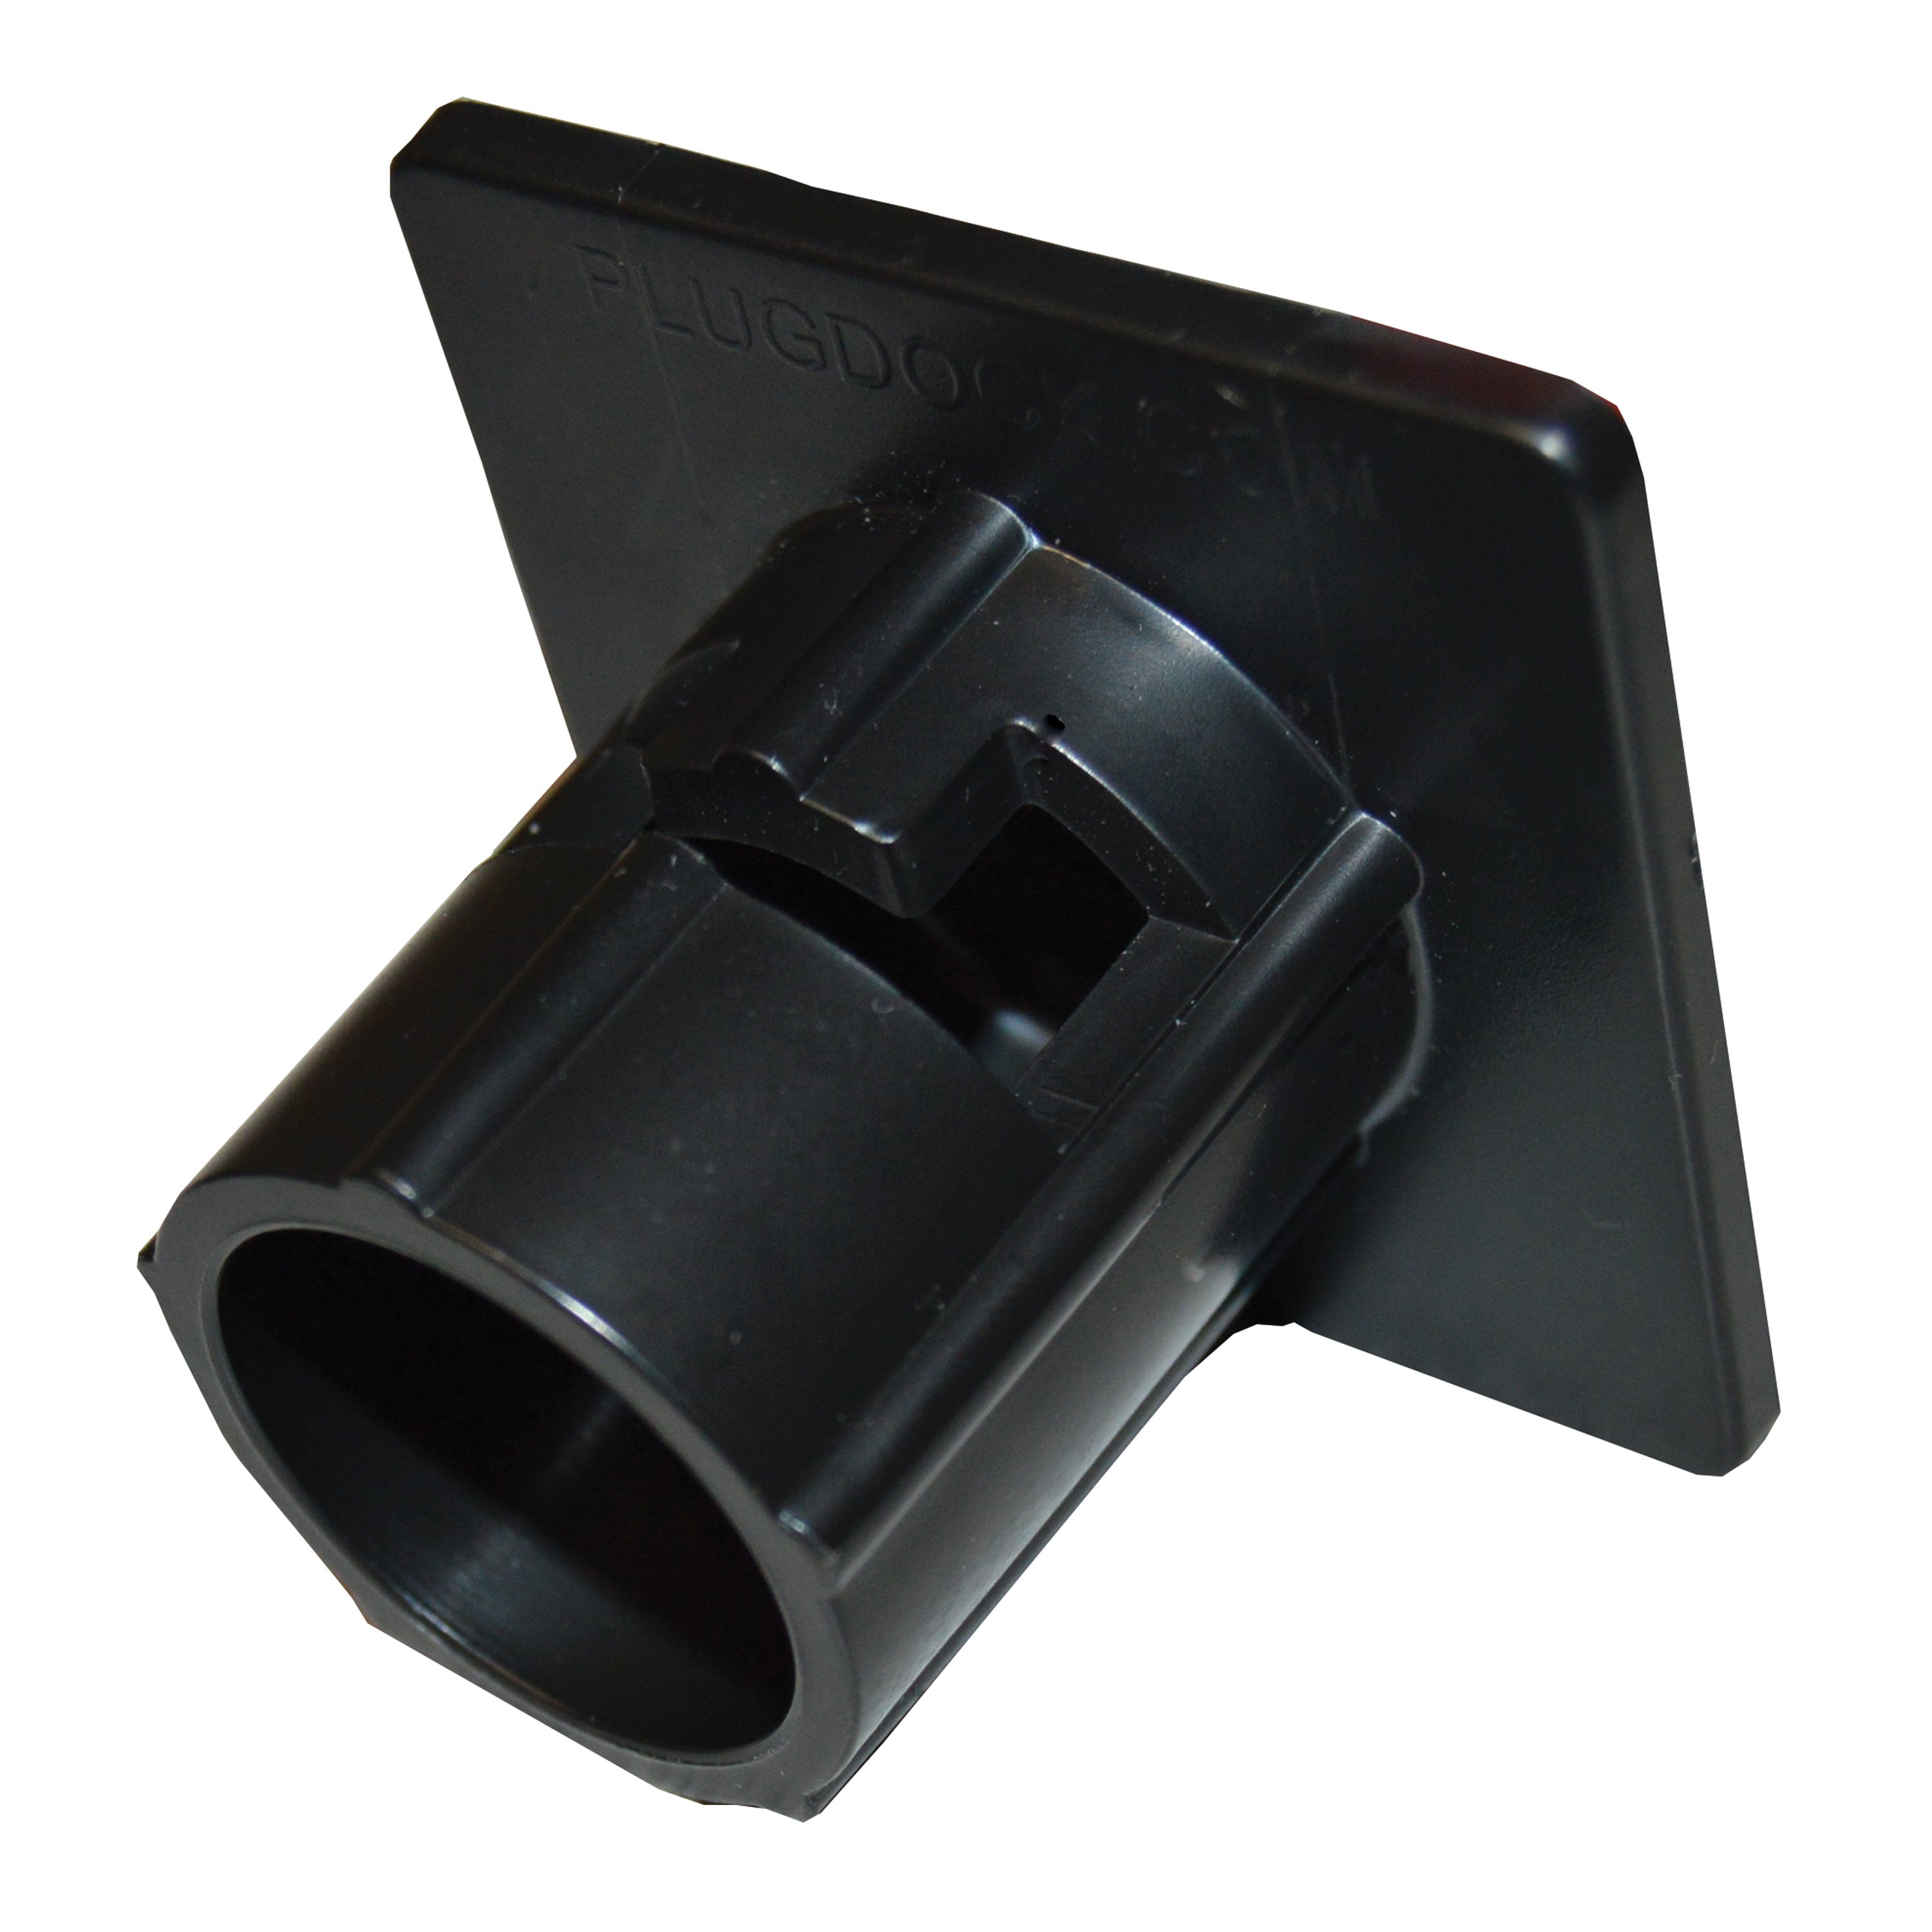 Moeller 020905-15 Plug Docks for 1" Turn-Tite or Snap-Tite Drain Plugs - Pack of 15